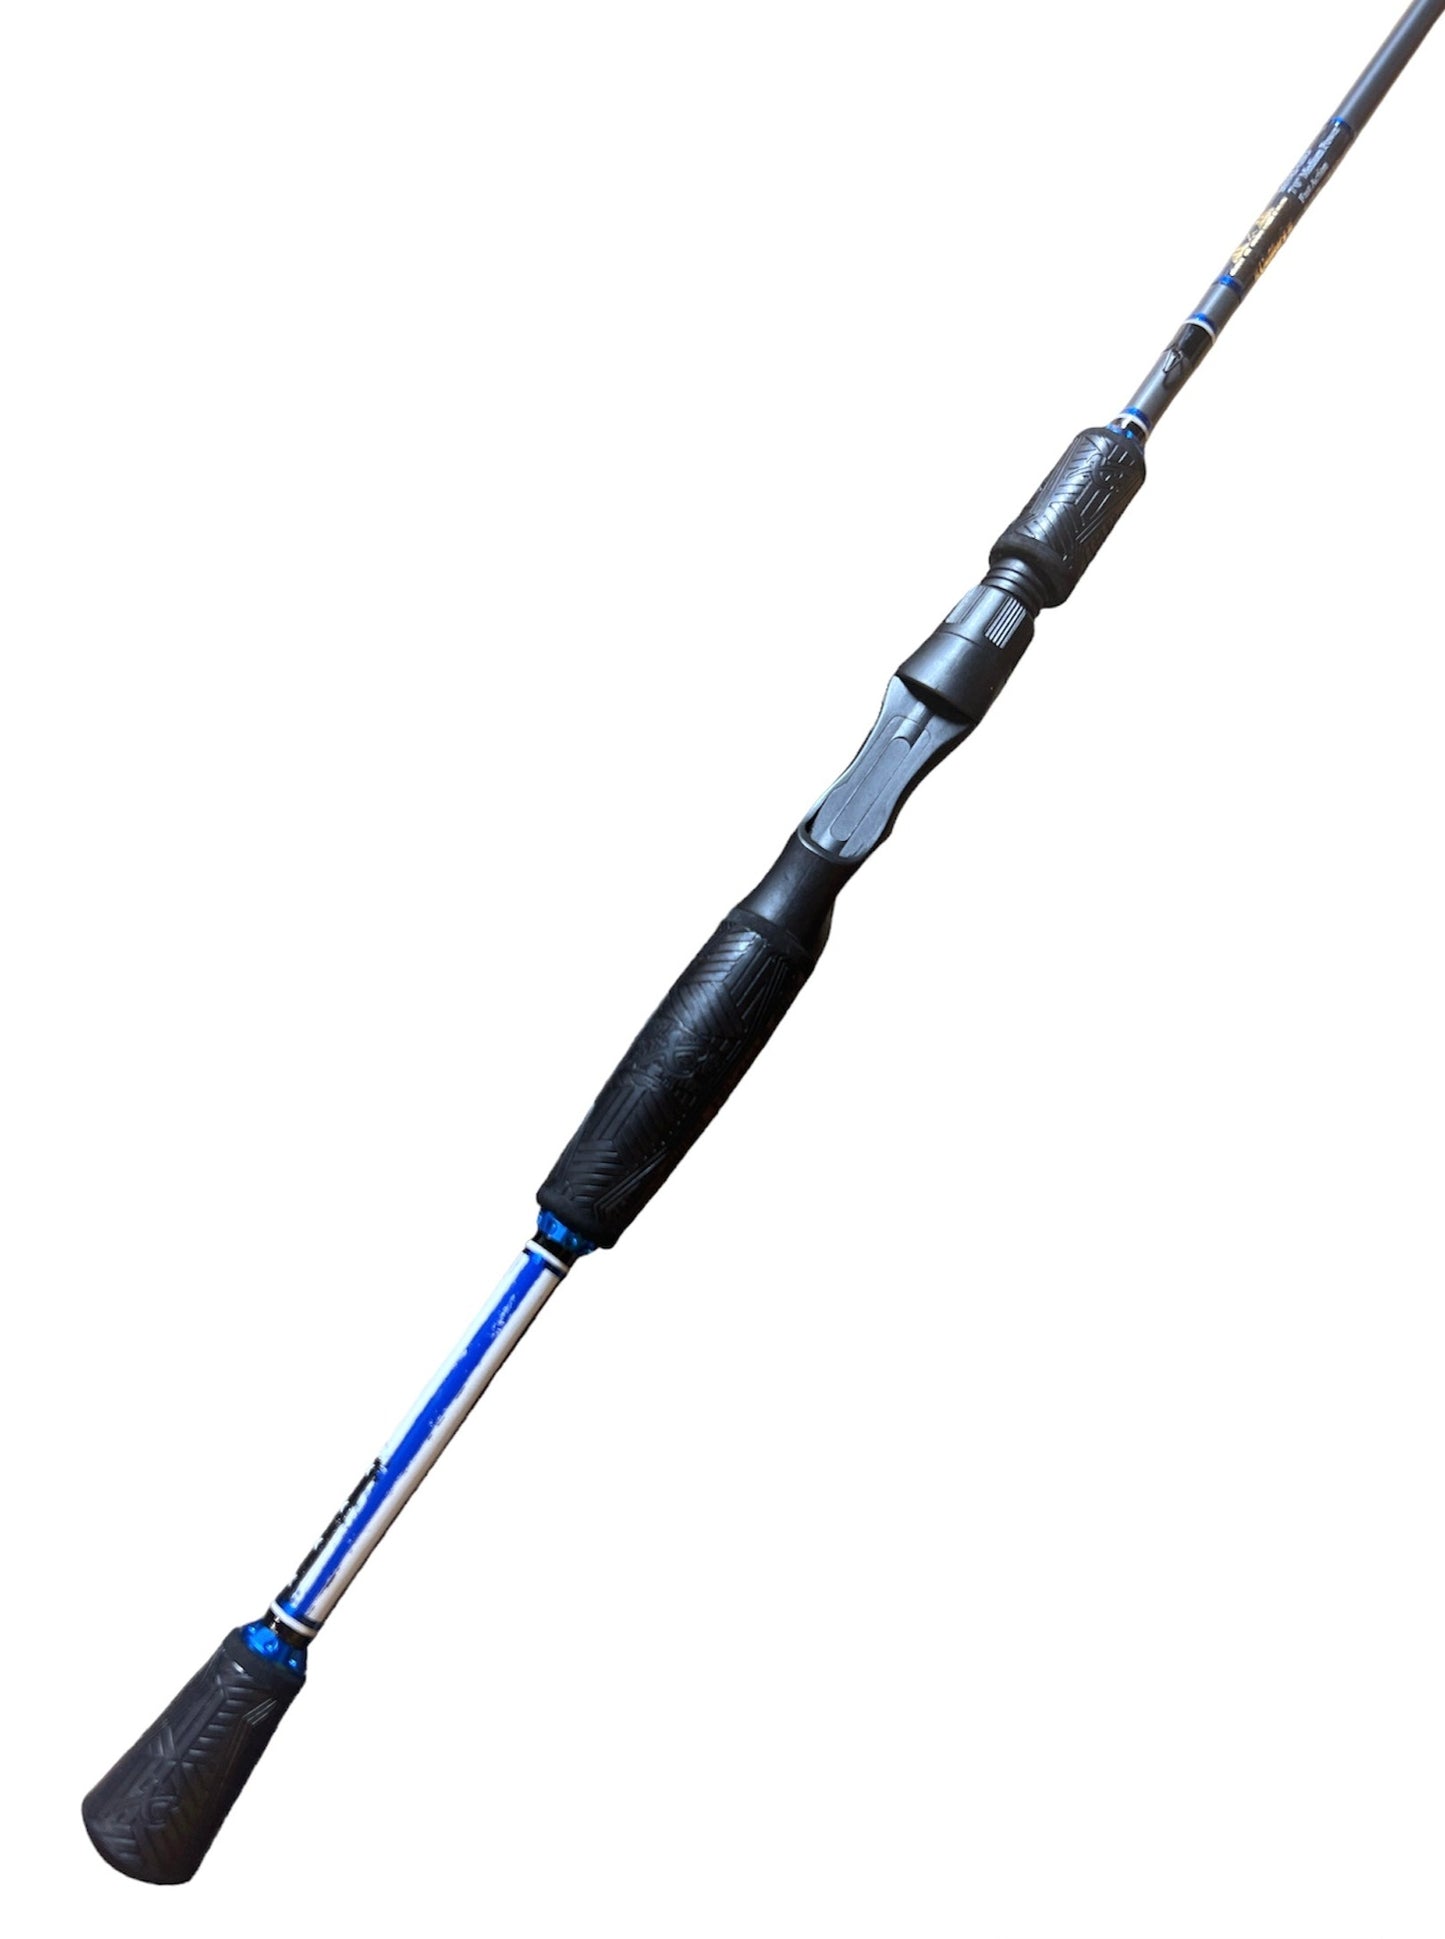 7'0" Medium Power Fast Action Bass Bully Pre-Built Casting Rod - BACK THE BLUE